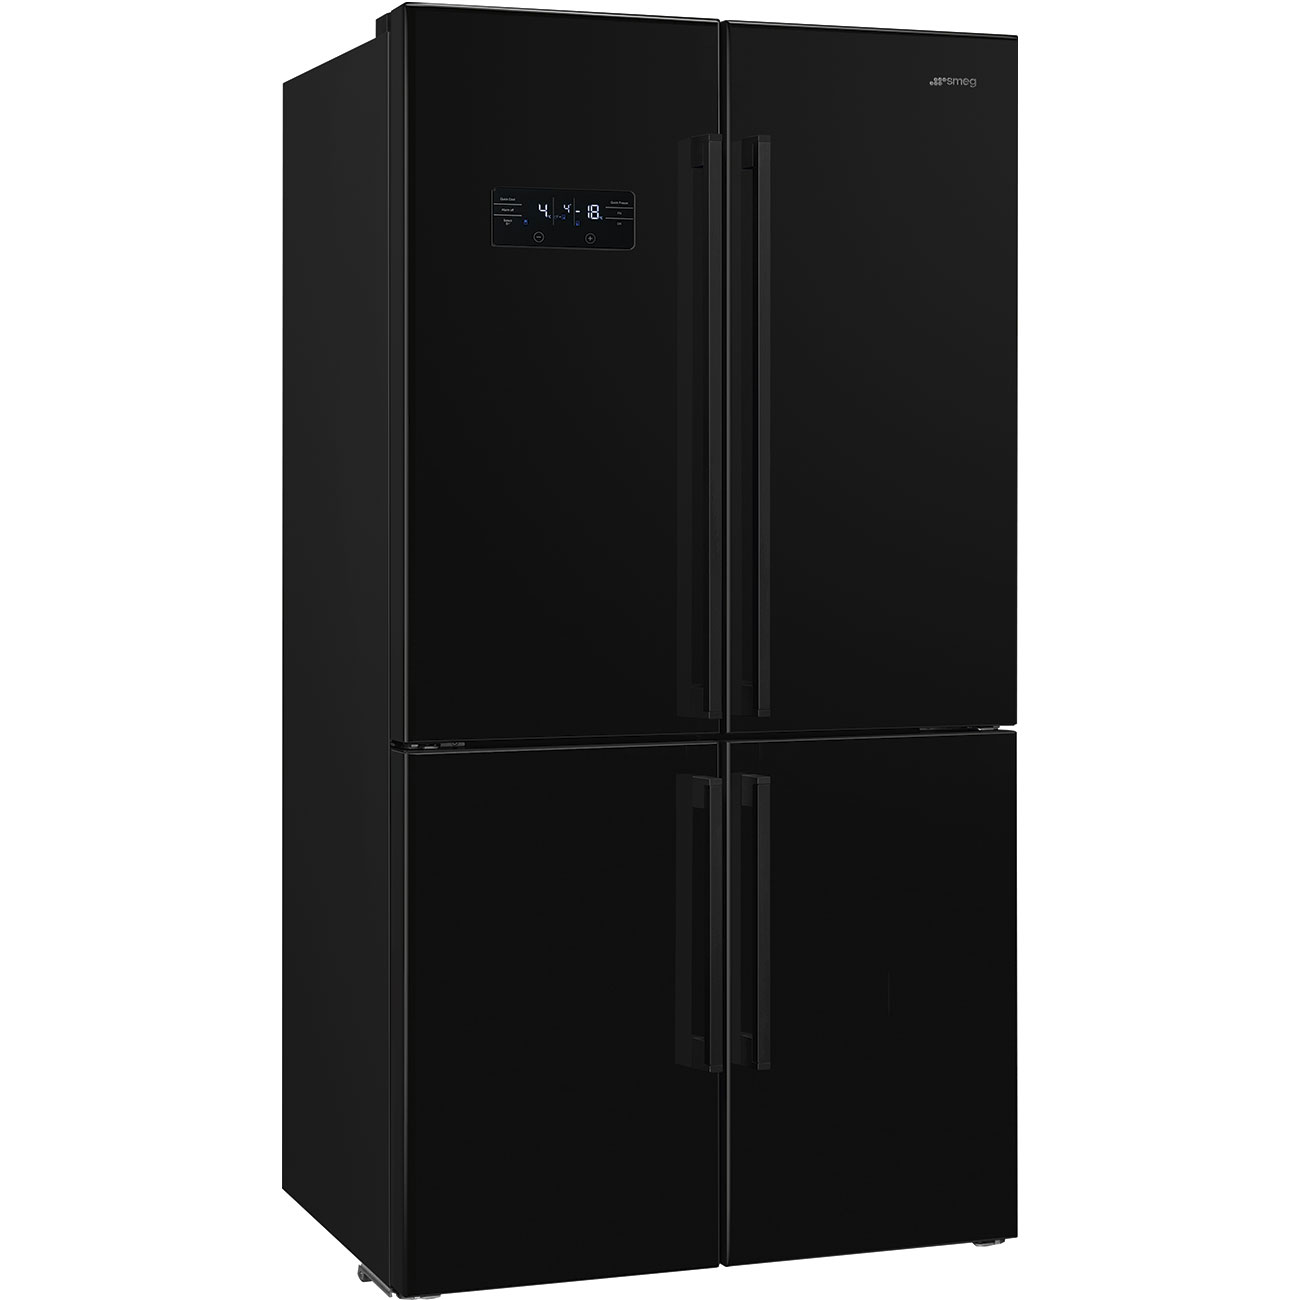 4 Doors Free standing refrigerator - Smeg_1